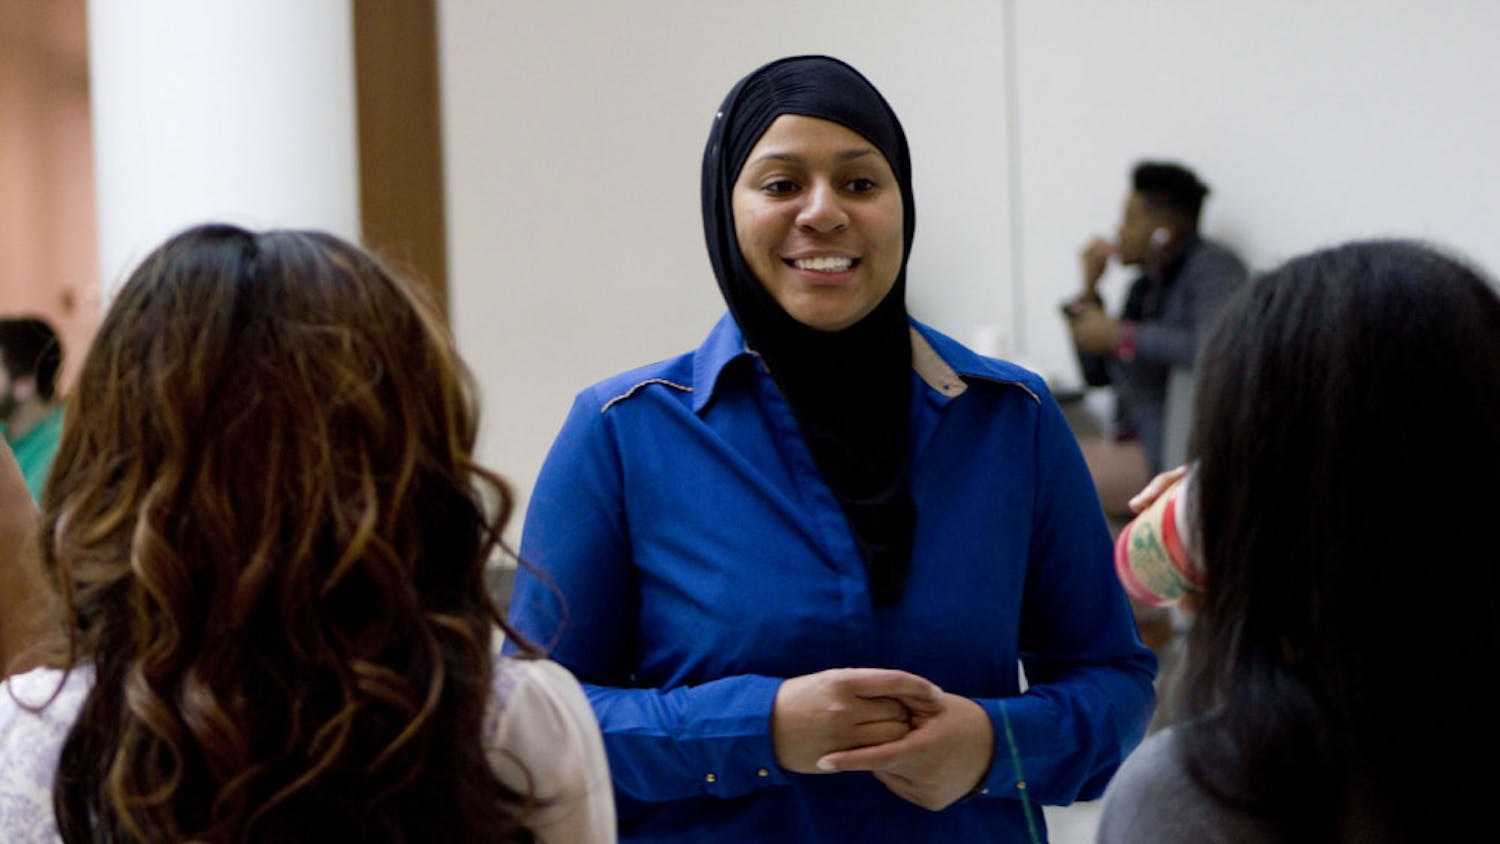 Muslim students celebrate the hijab